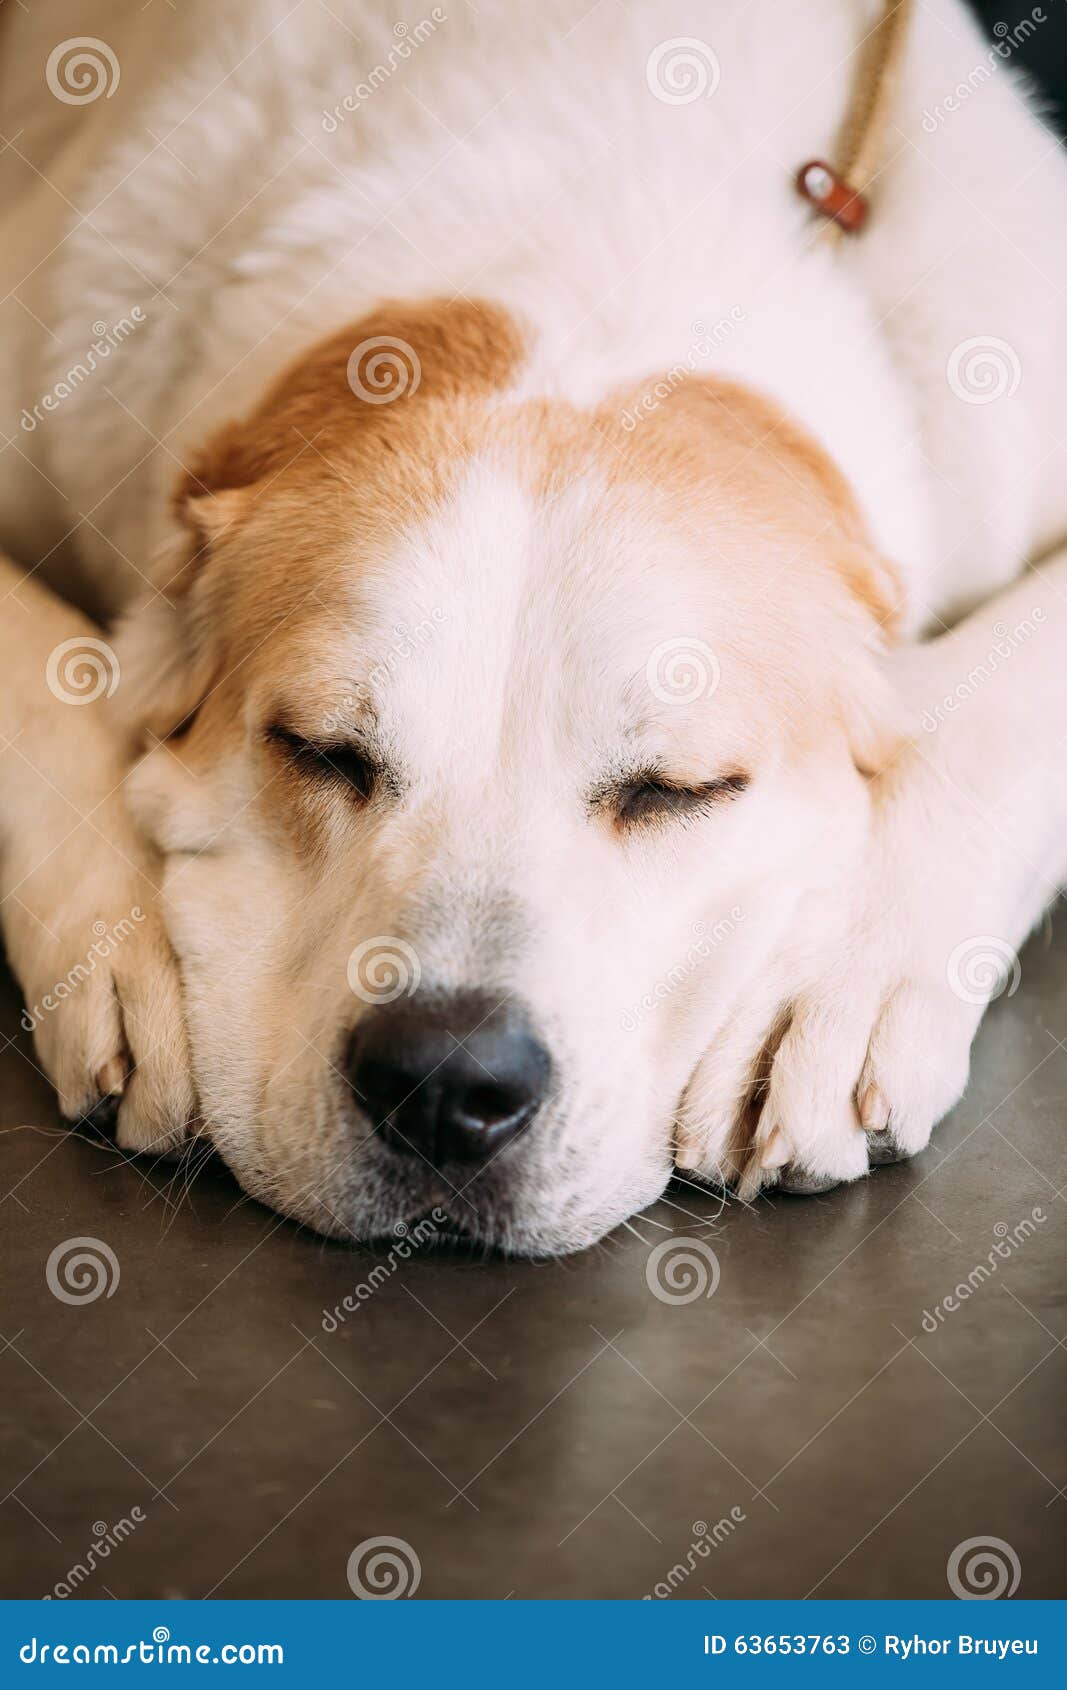 central asian shepherd dog. molossoid type dog